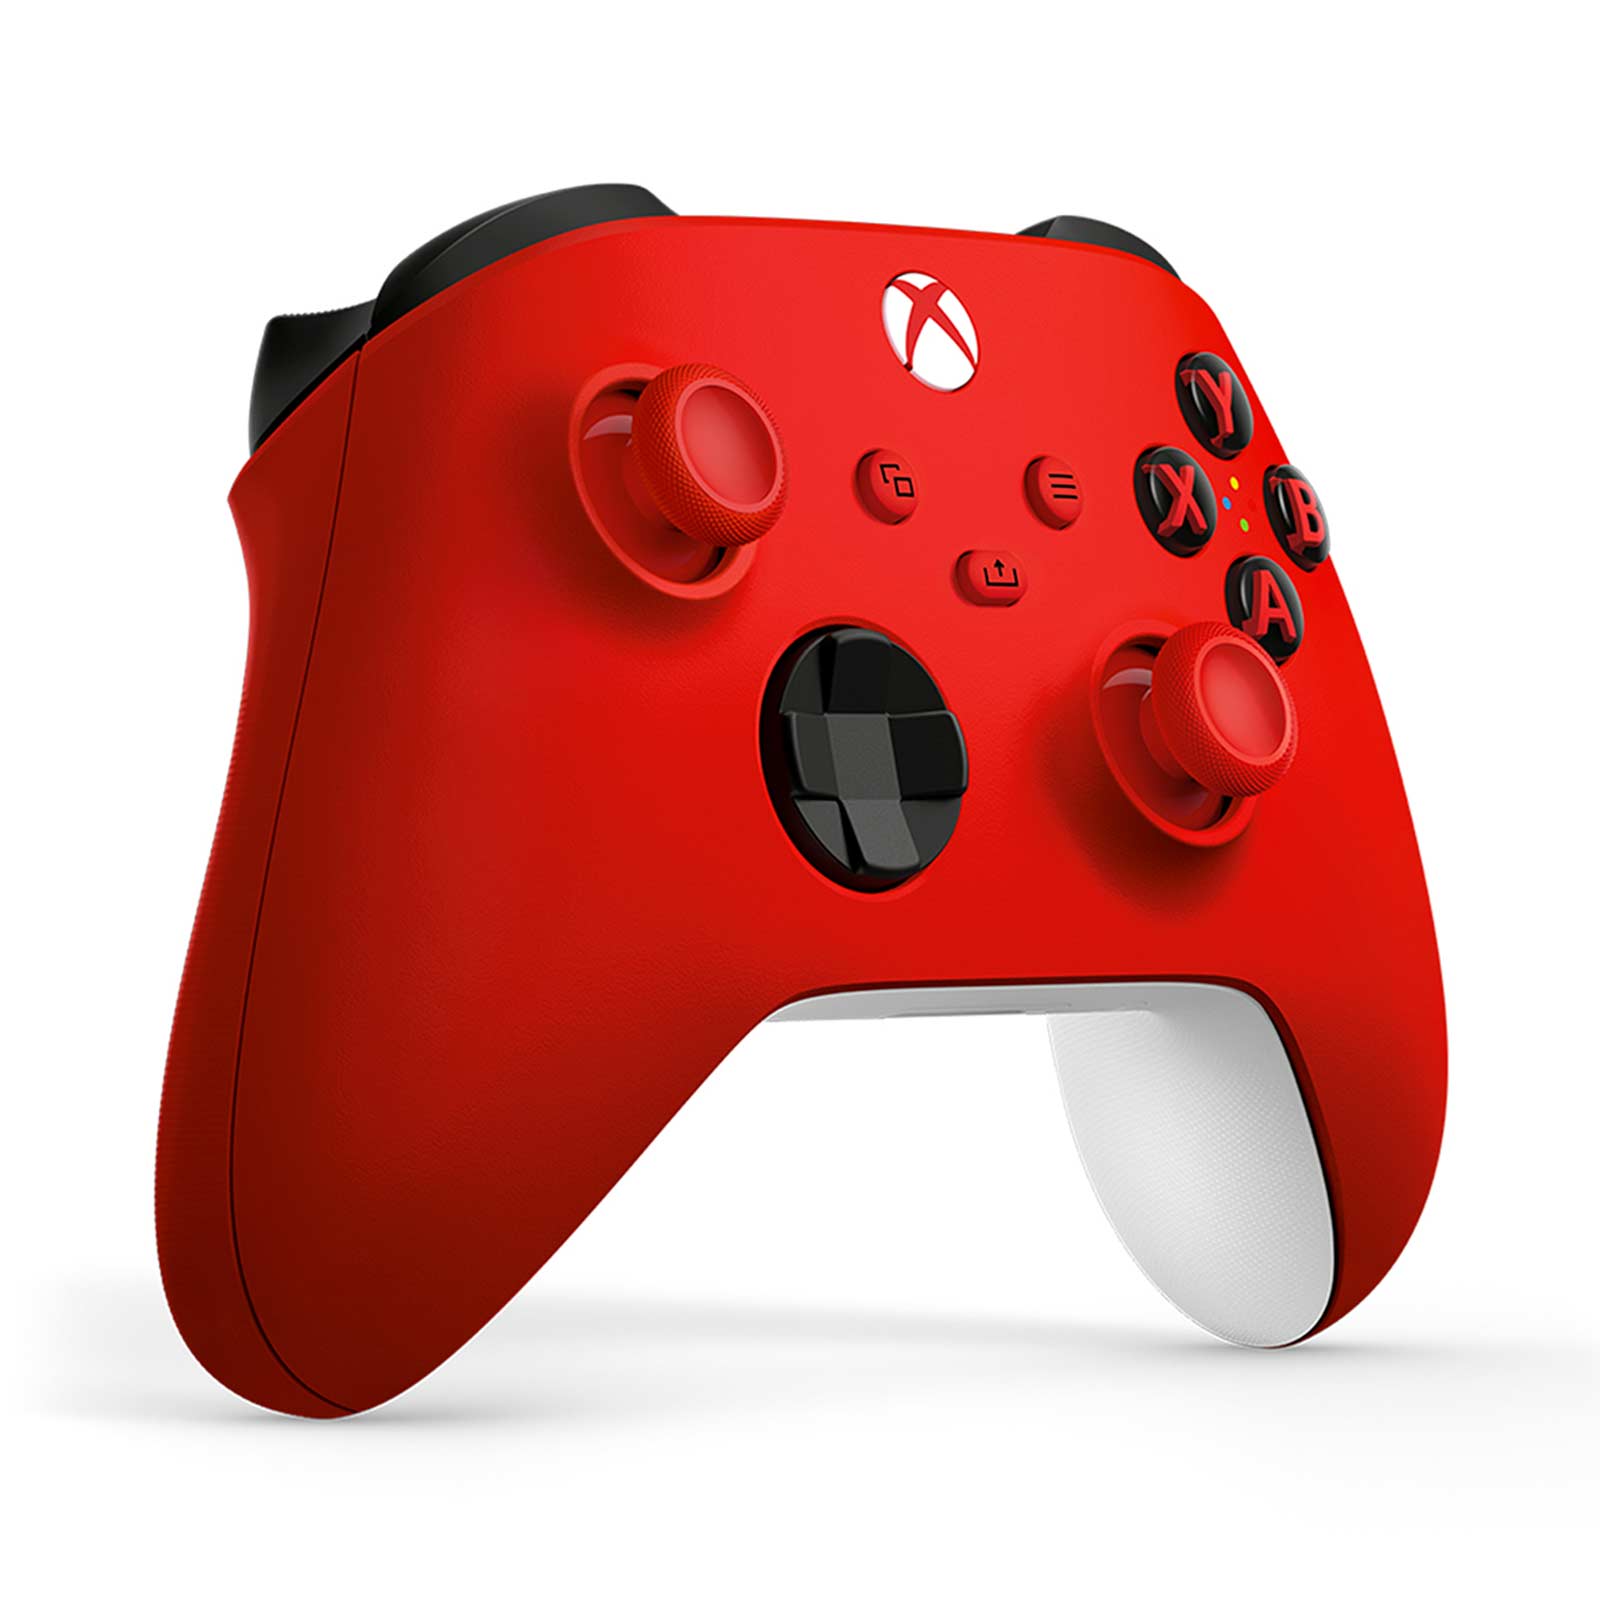 Control inalámbrico para Xbox, rojo